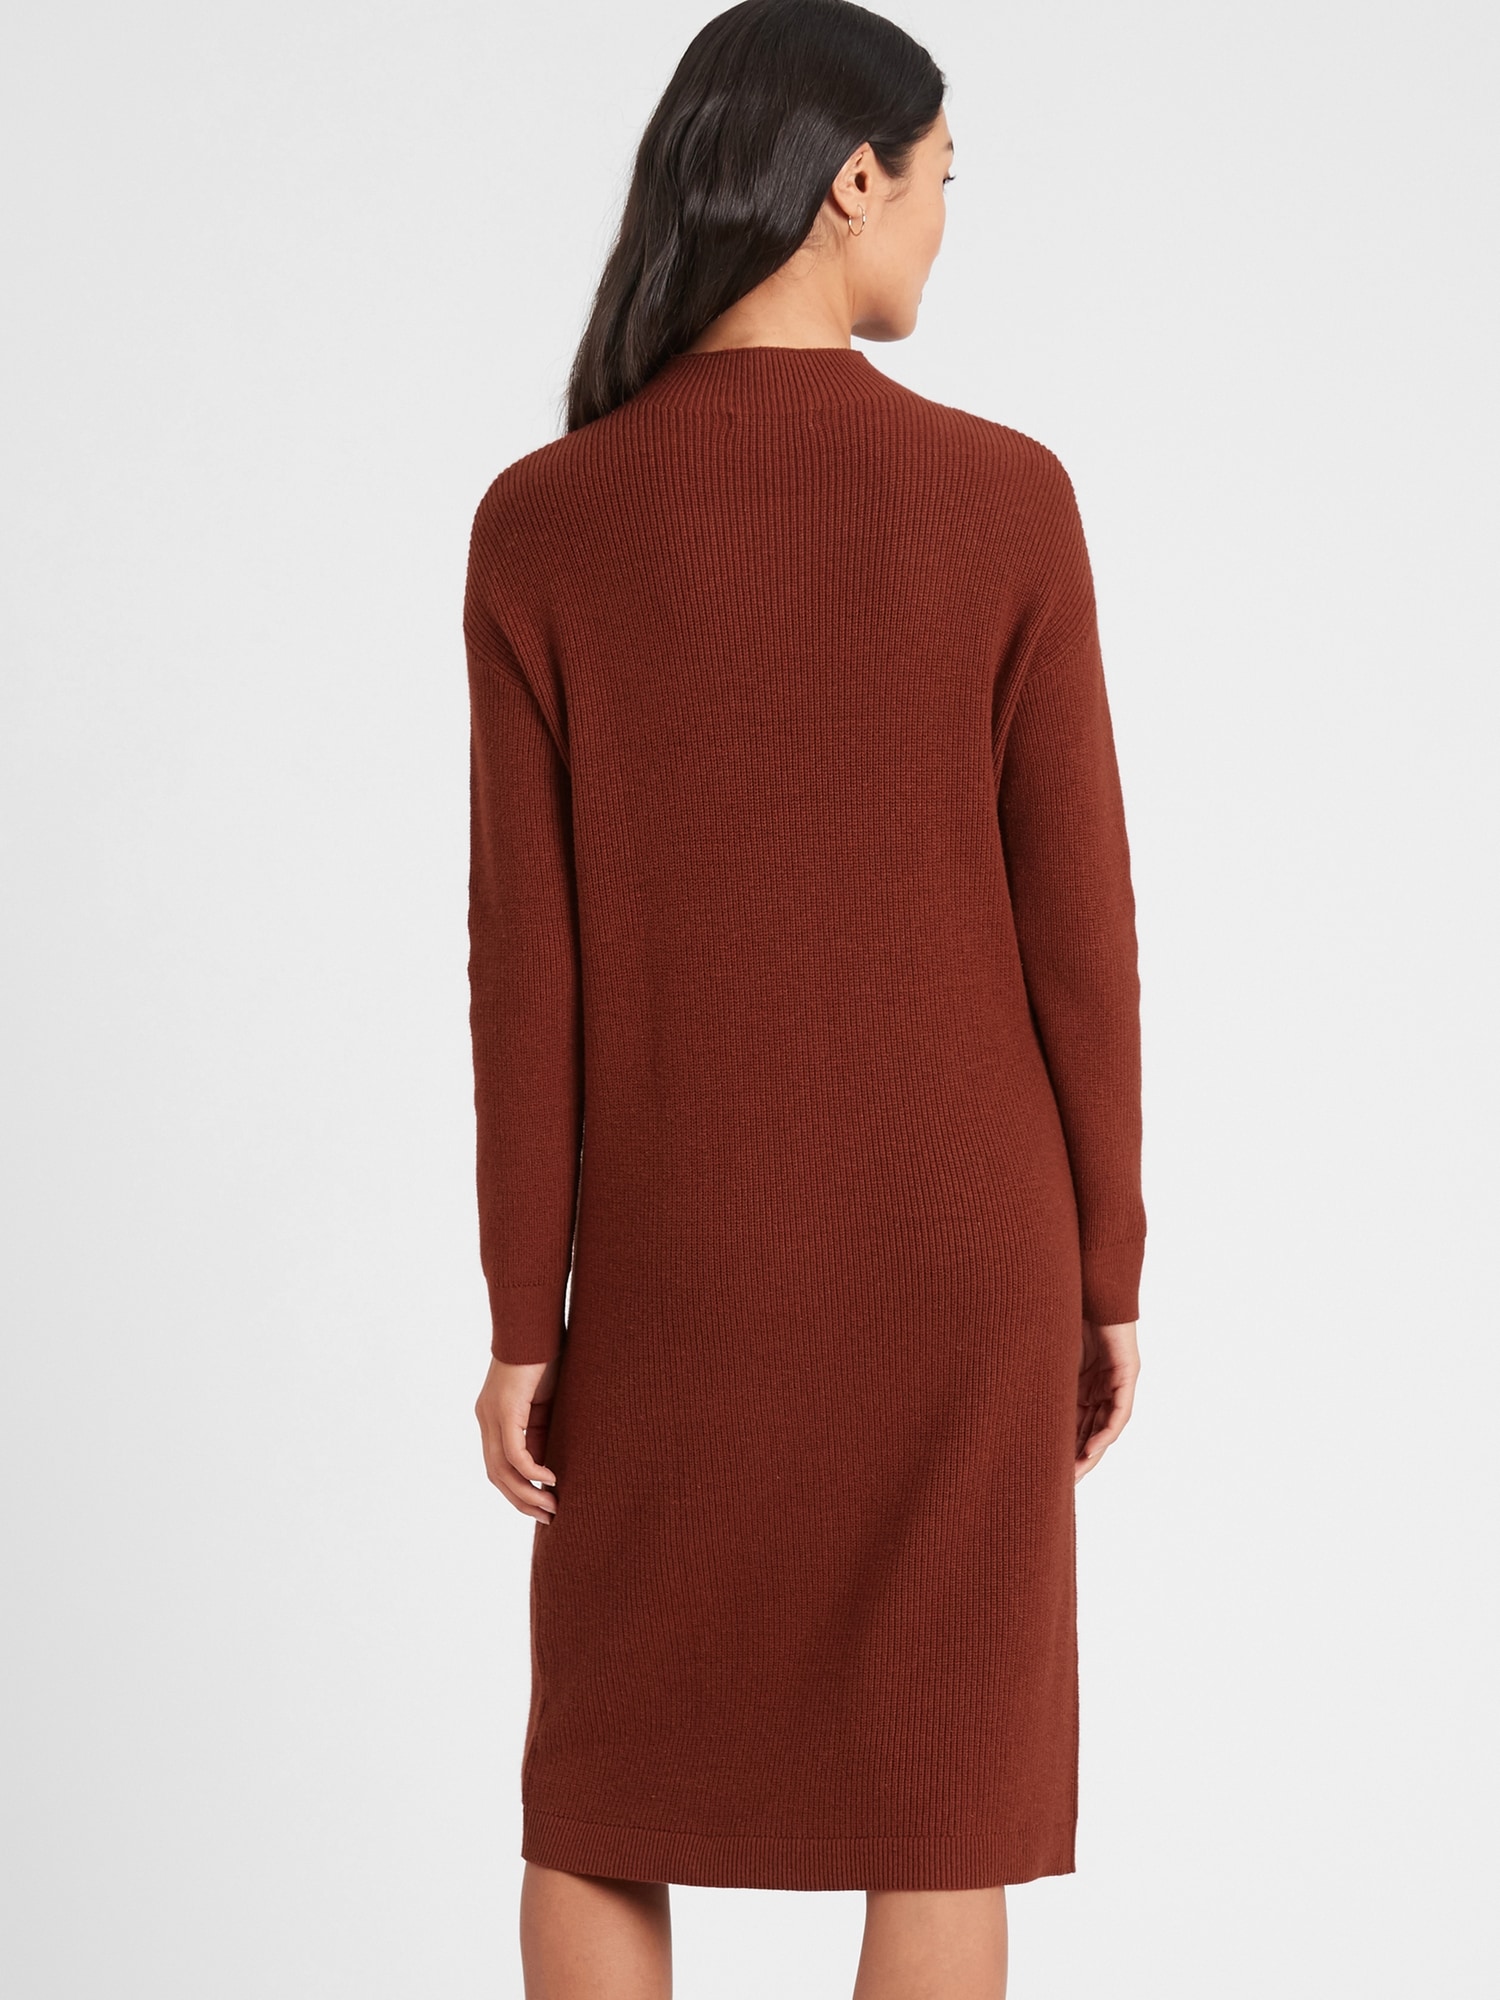 Textured Sweater Dress | Banana Republic Factory